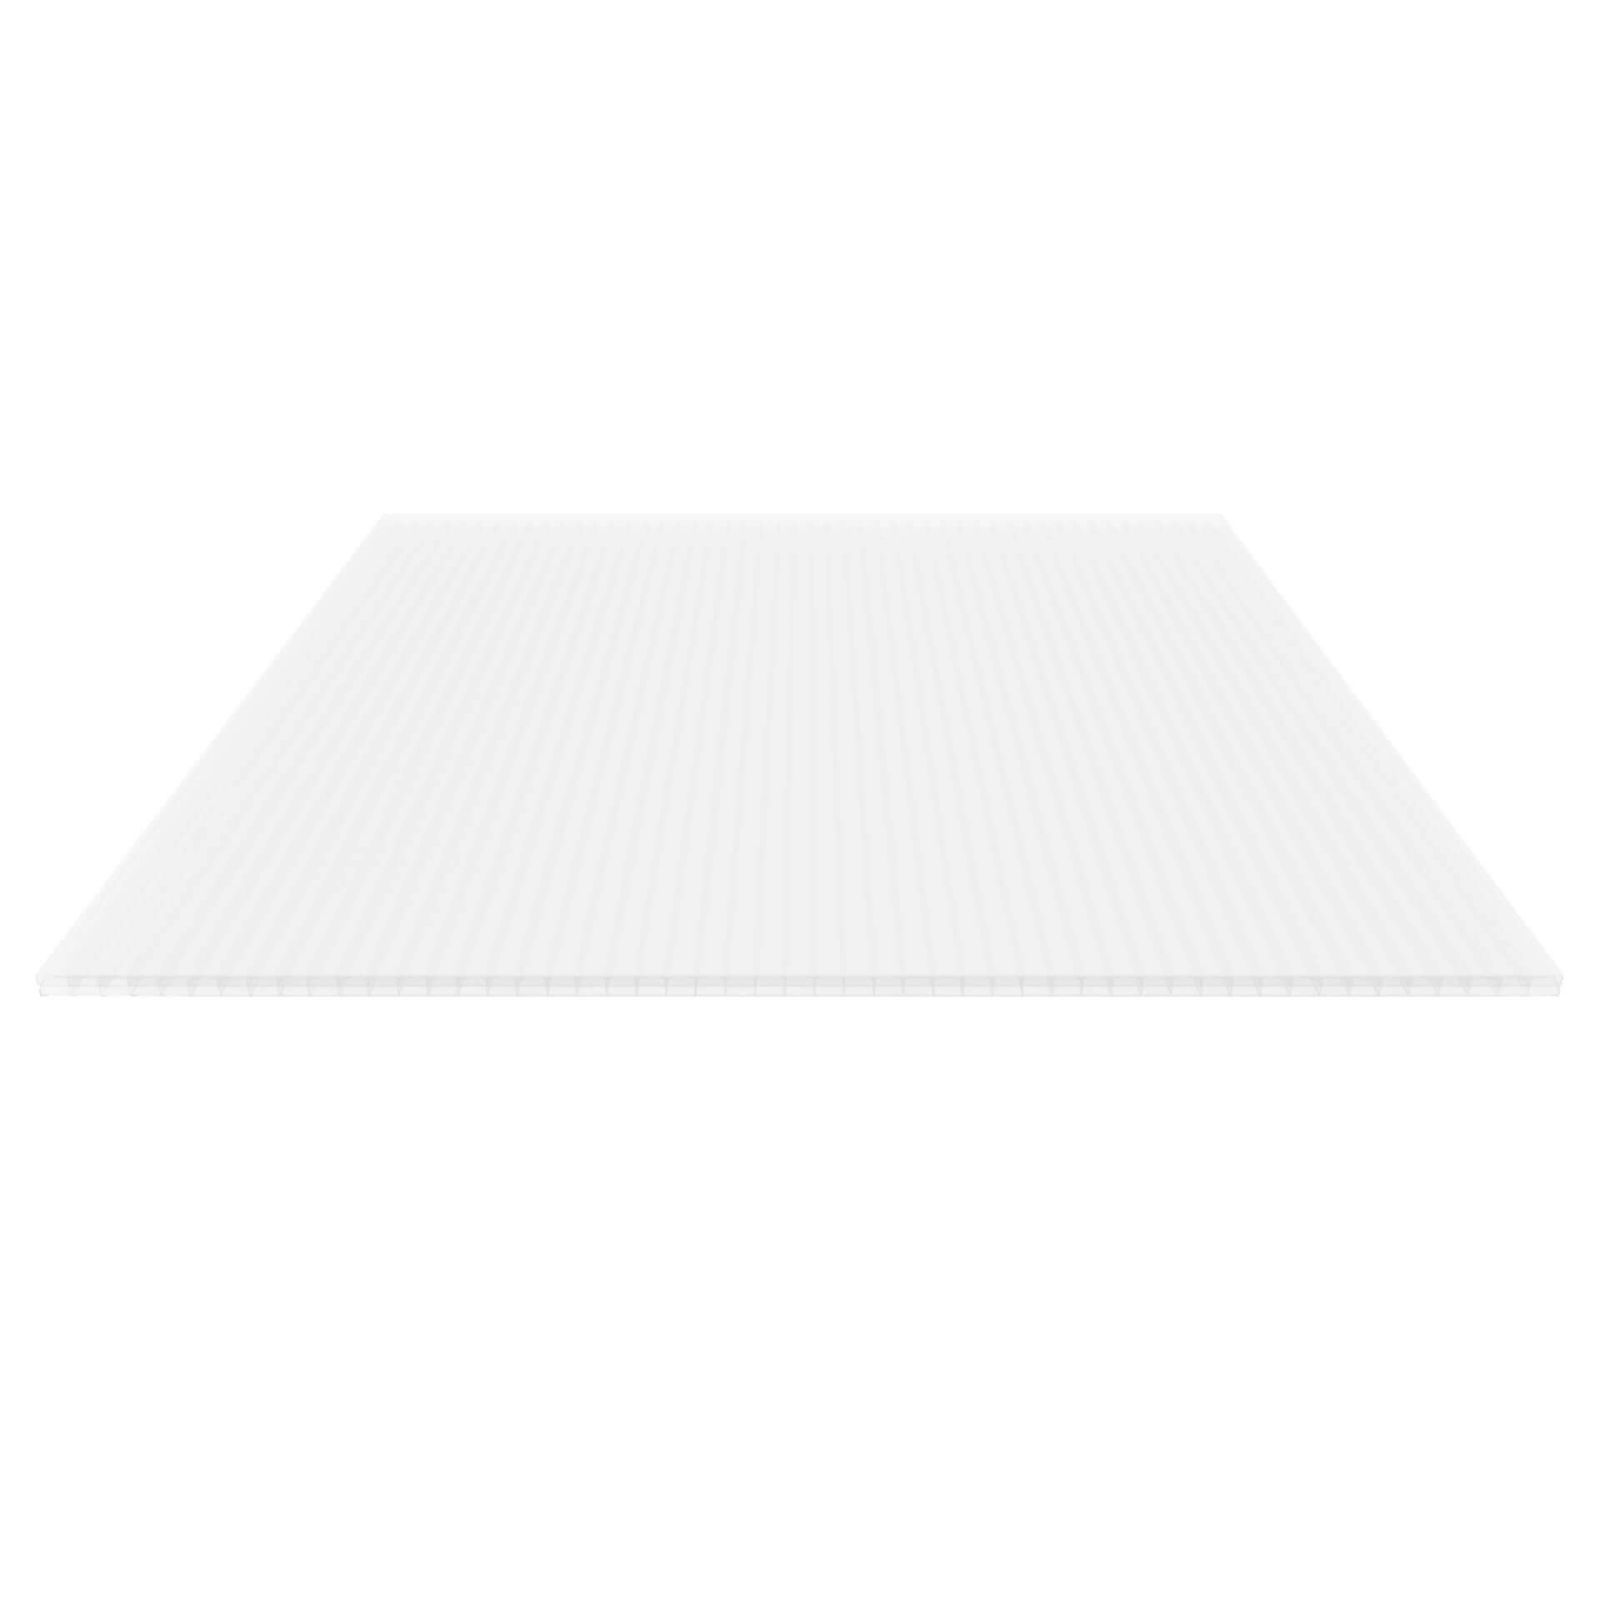 Polycarbonat Stegplatte | 16 mm | Breite 1200 mm | Opal Weiß | 500 mm #1